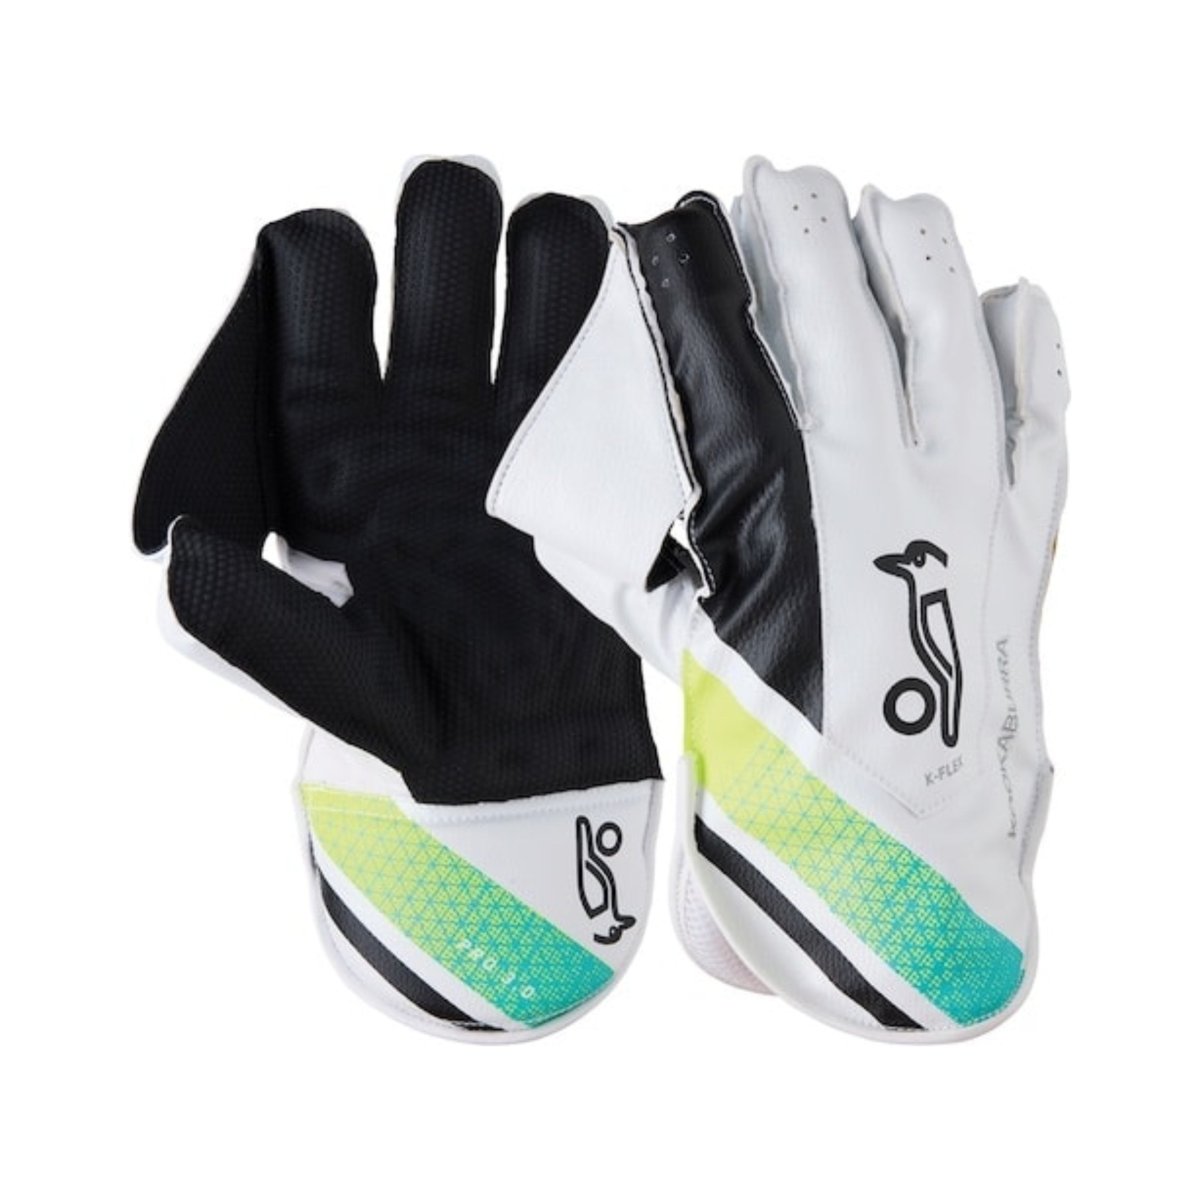 Kookaburra Rapid Pro 3.0 Cricket Wicket Keeping Gloves Junior.